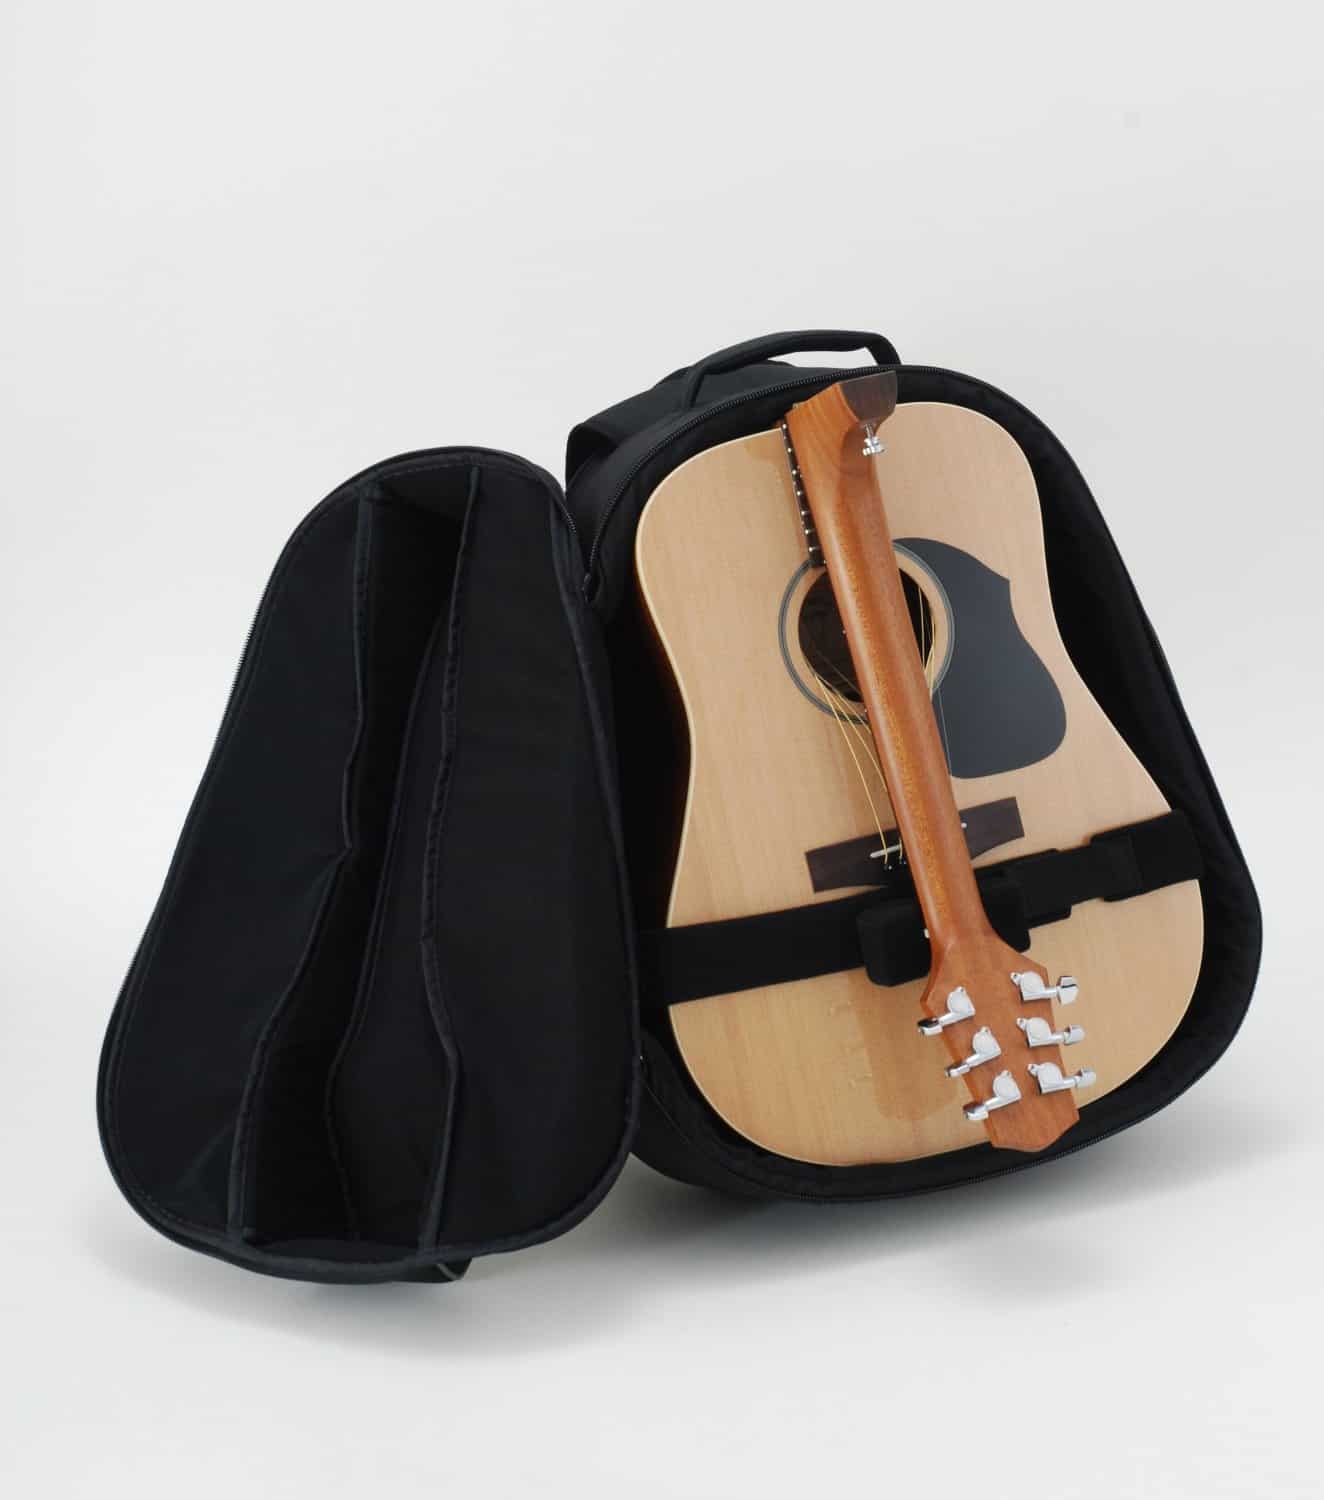 Voyage-Air Transit Series VAOM-02 Folding Orchestra Model Acoustic Guitar Bagged